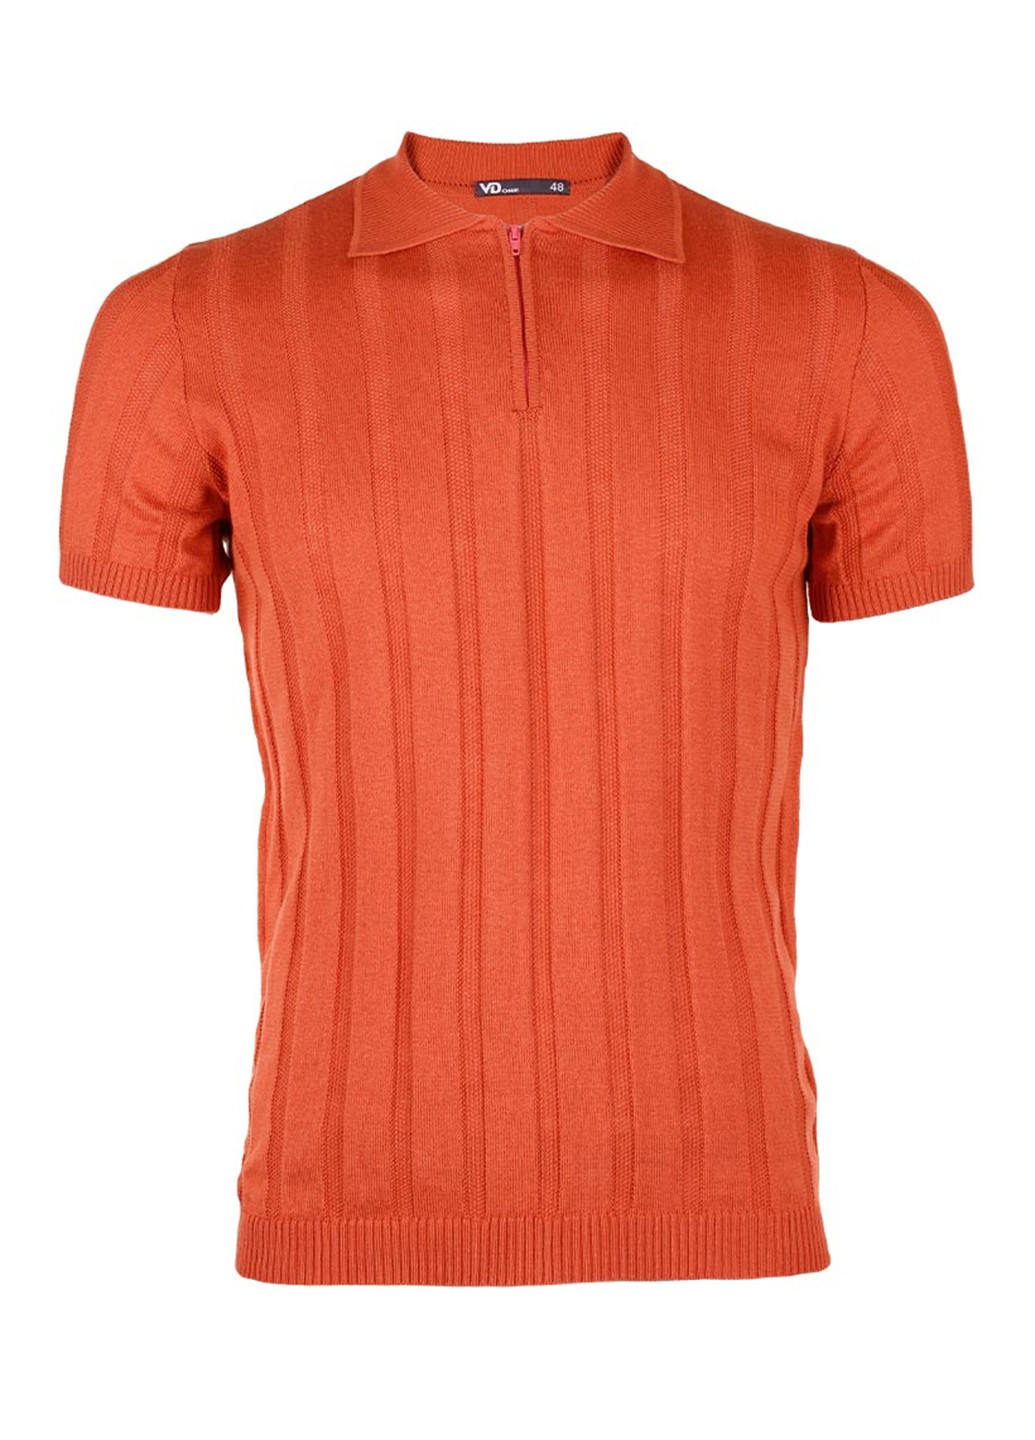 Оранжевая футболка-поло для мужчин VD One однотонная